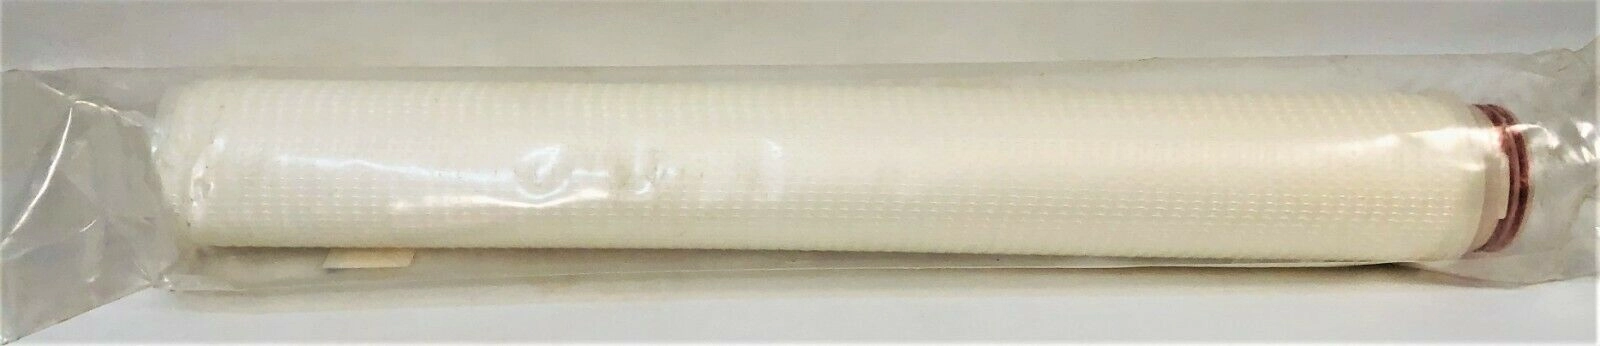 Millipore Polygard CR0172006 Cartridge Filter - 1um (Box of 6)